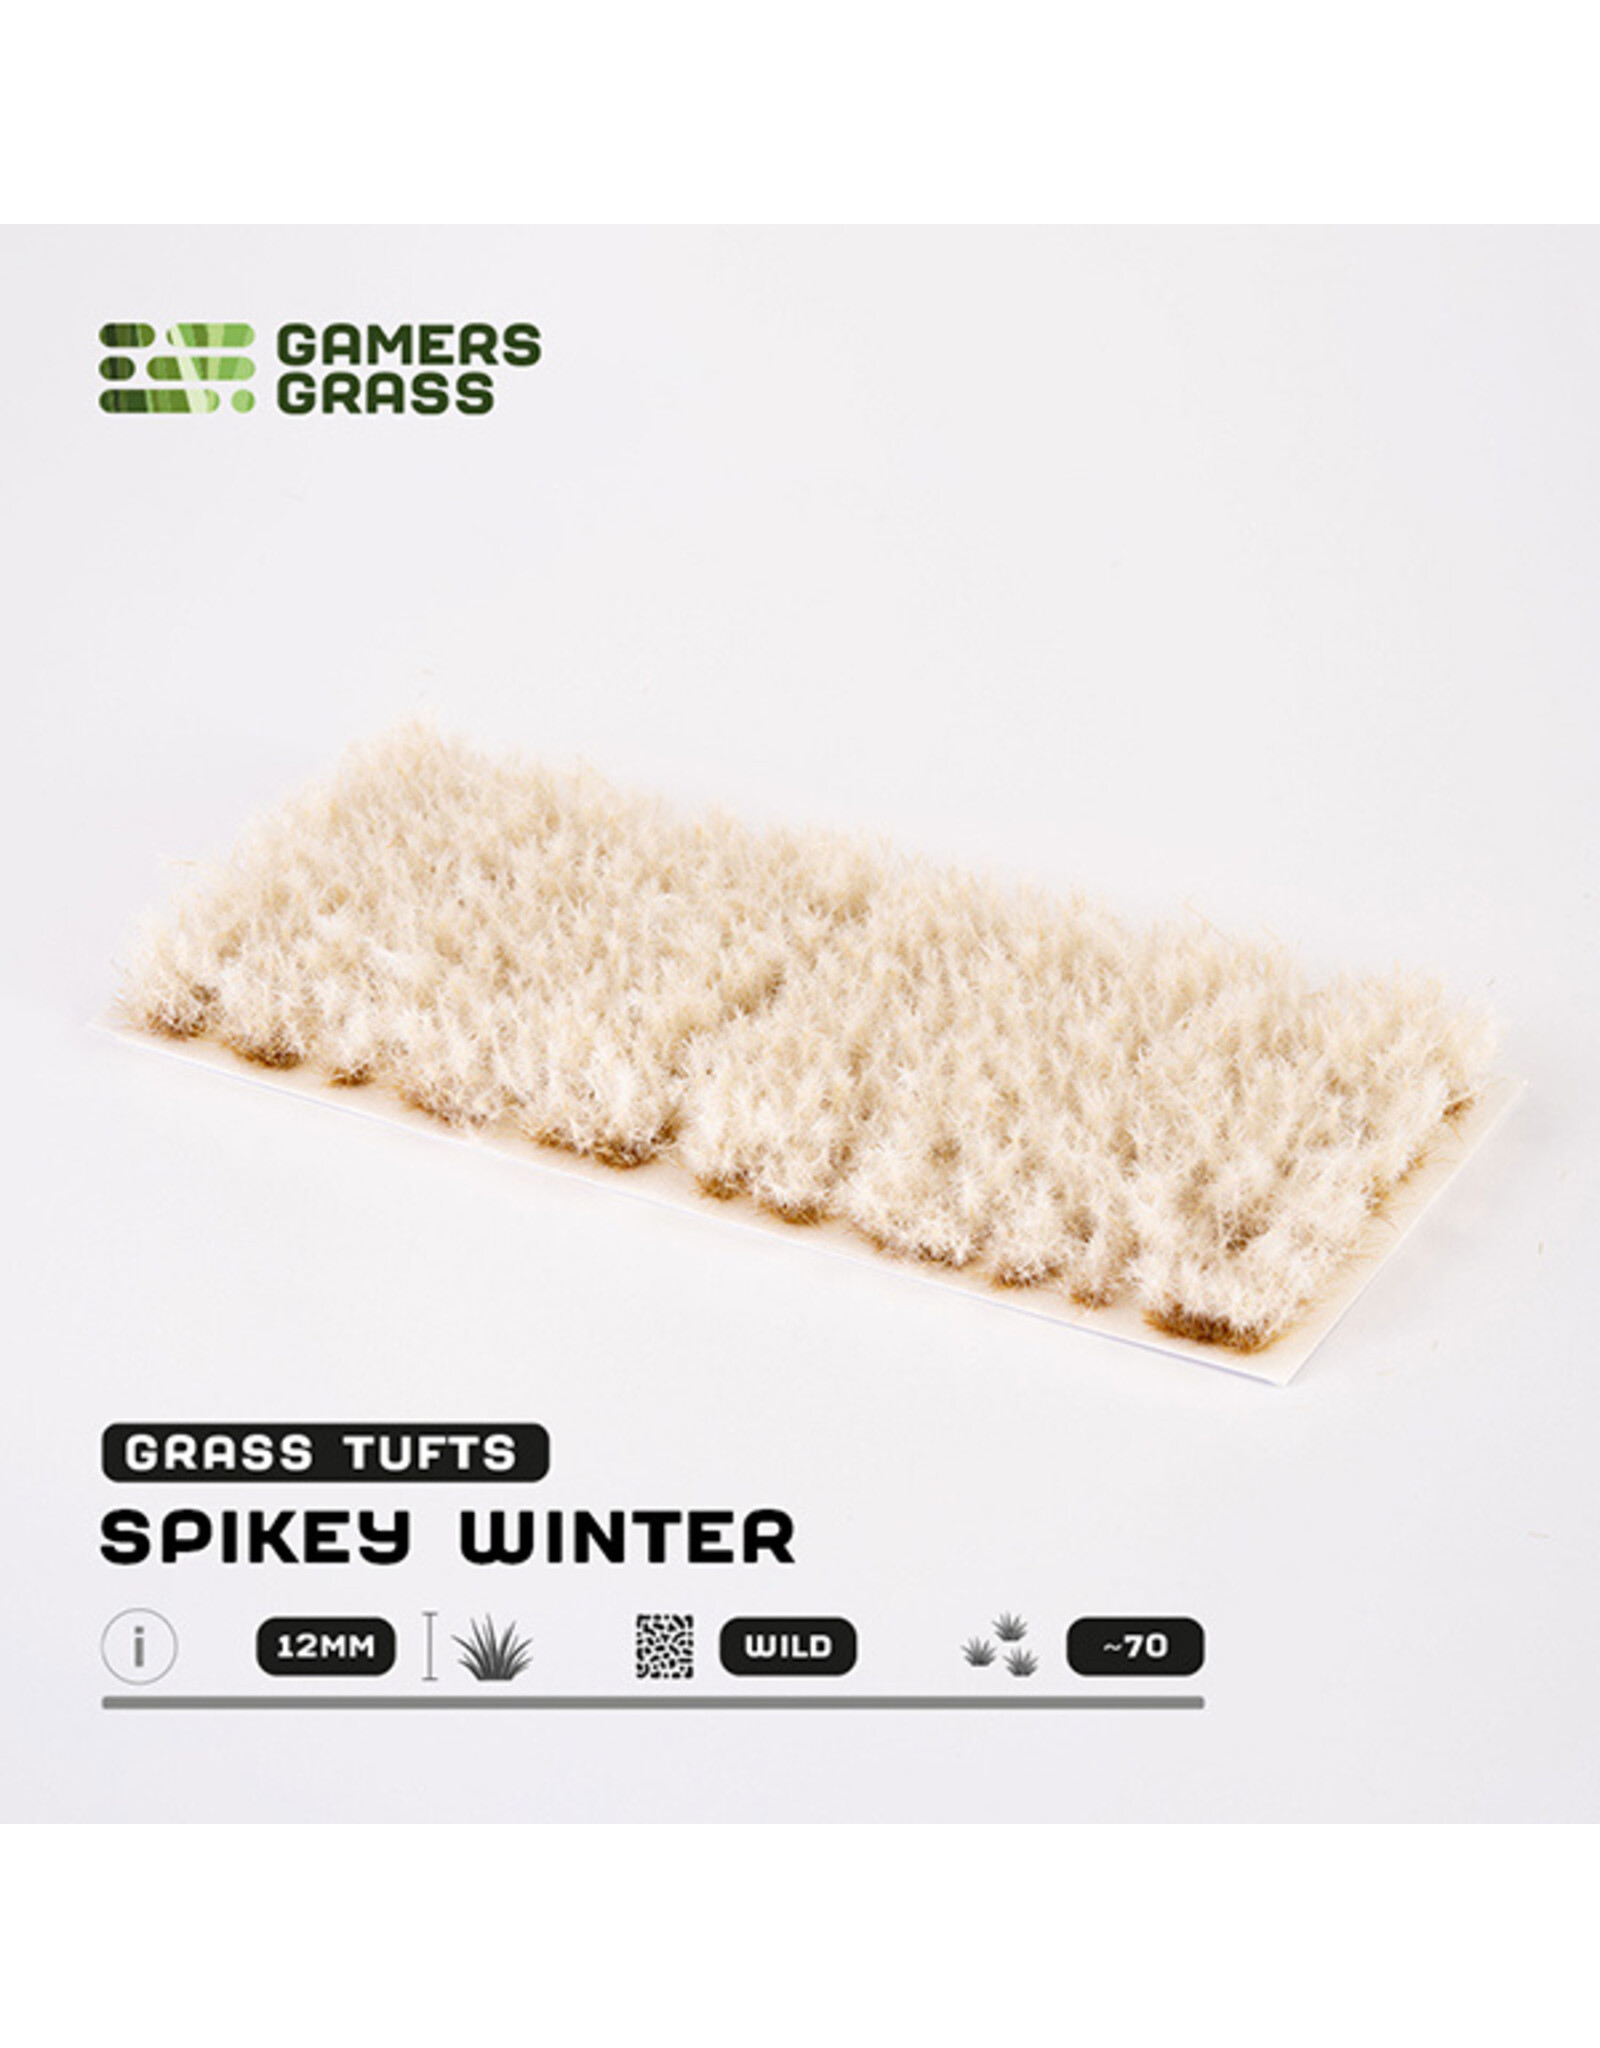 Gamers Grass Gamers Grass Tufts: Tufts- Spikey Winter 12mm- Wild